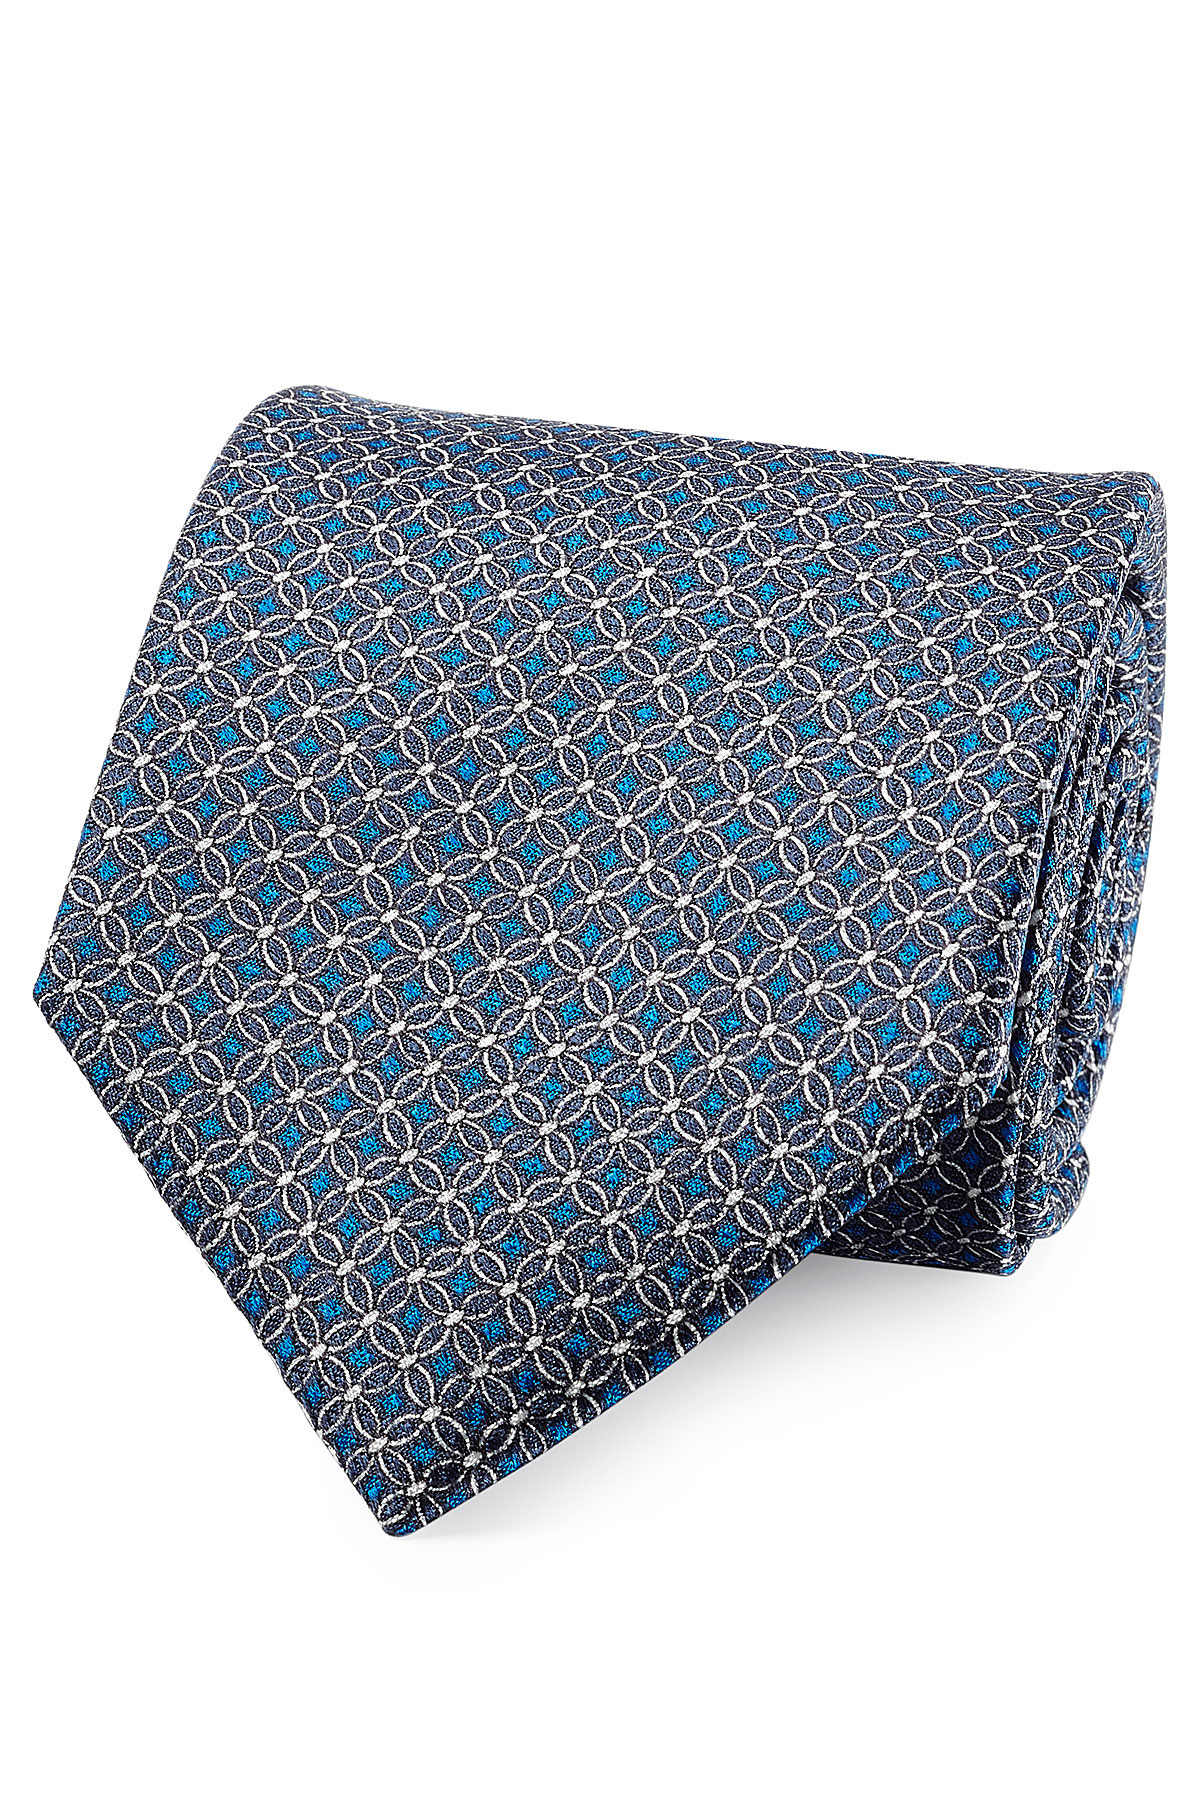 Brioni Woven Silk Tie - Blue for Men - Lyst